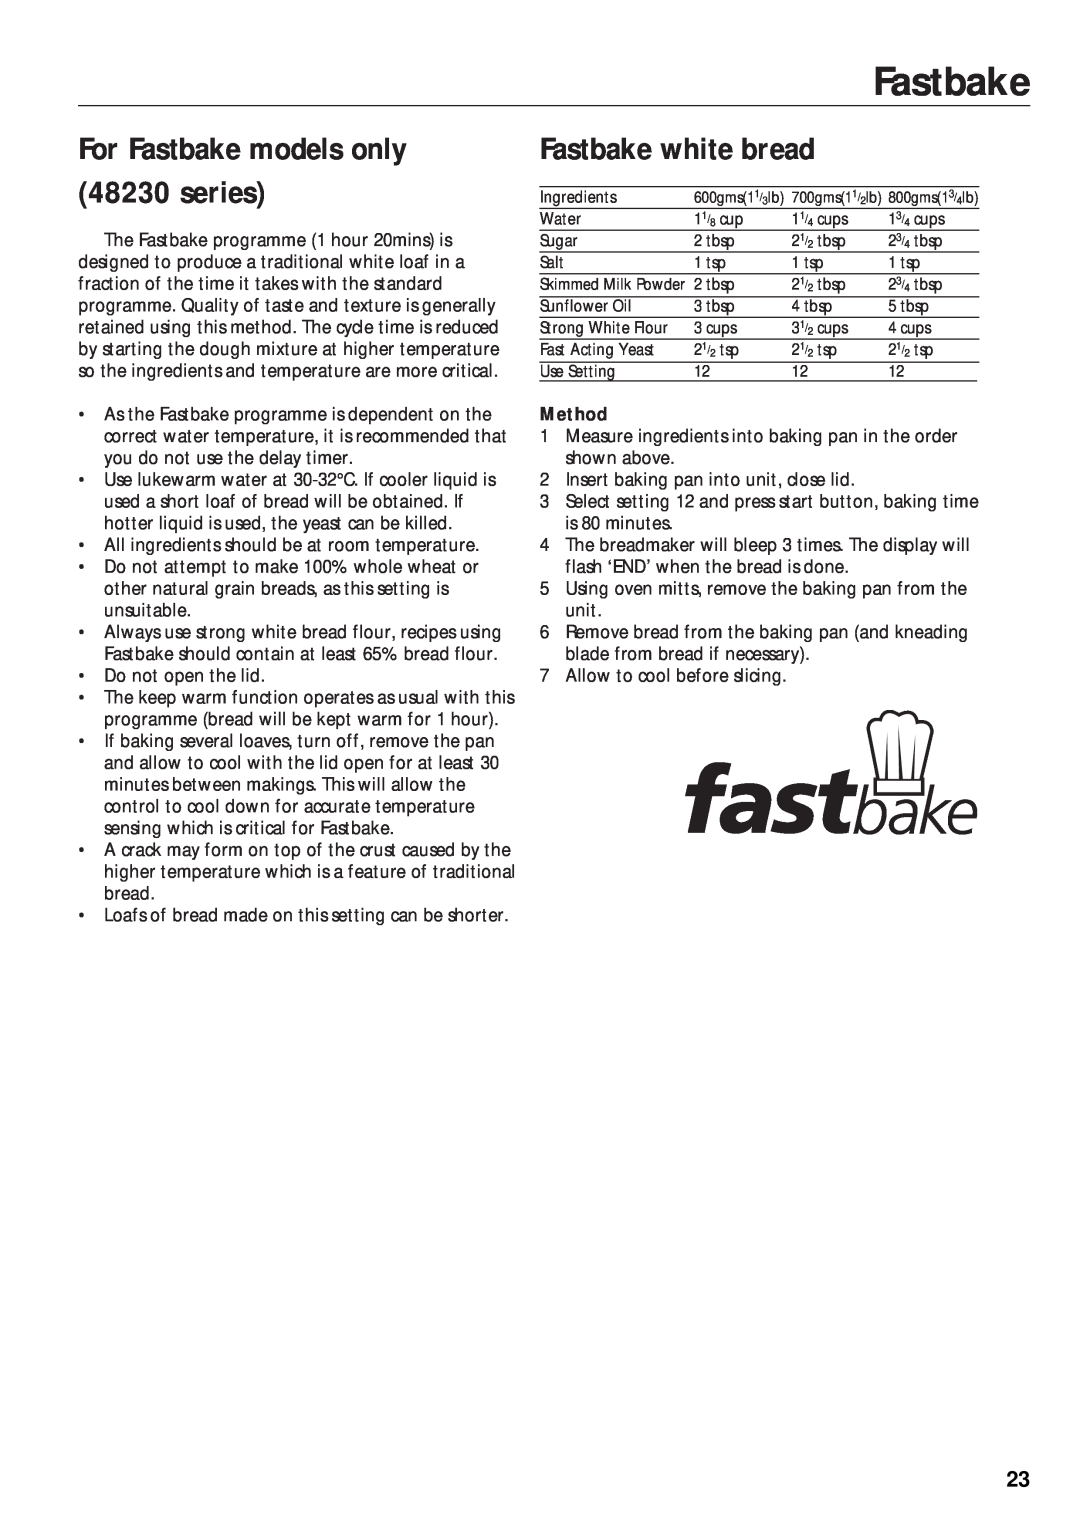 Morphy Richards 48220 manual For Fastbake models only 48230 series, Fastbake white bread, Method 